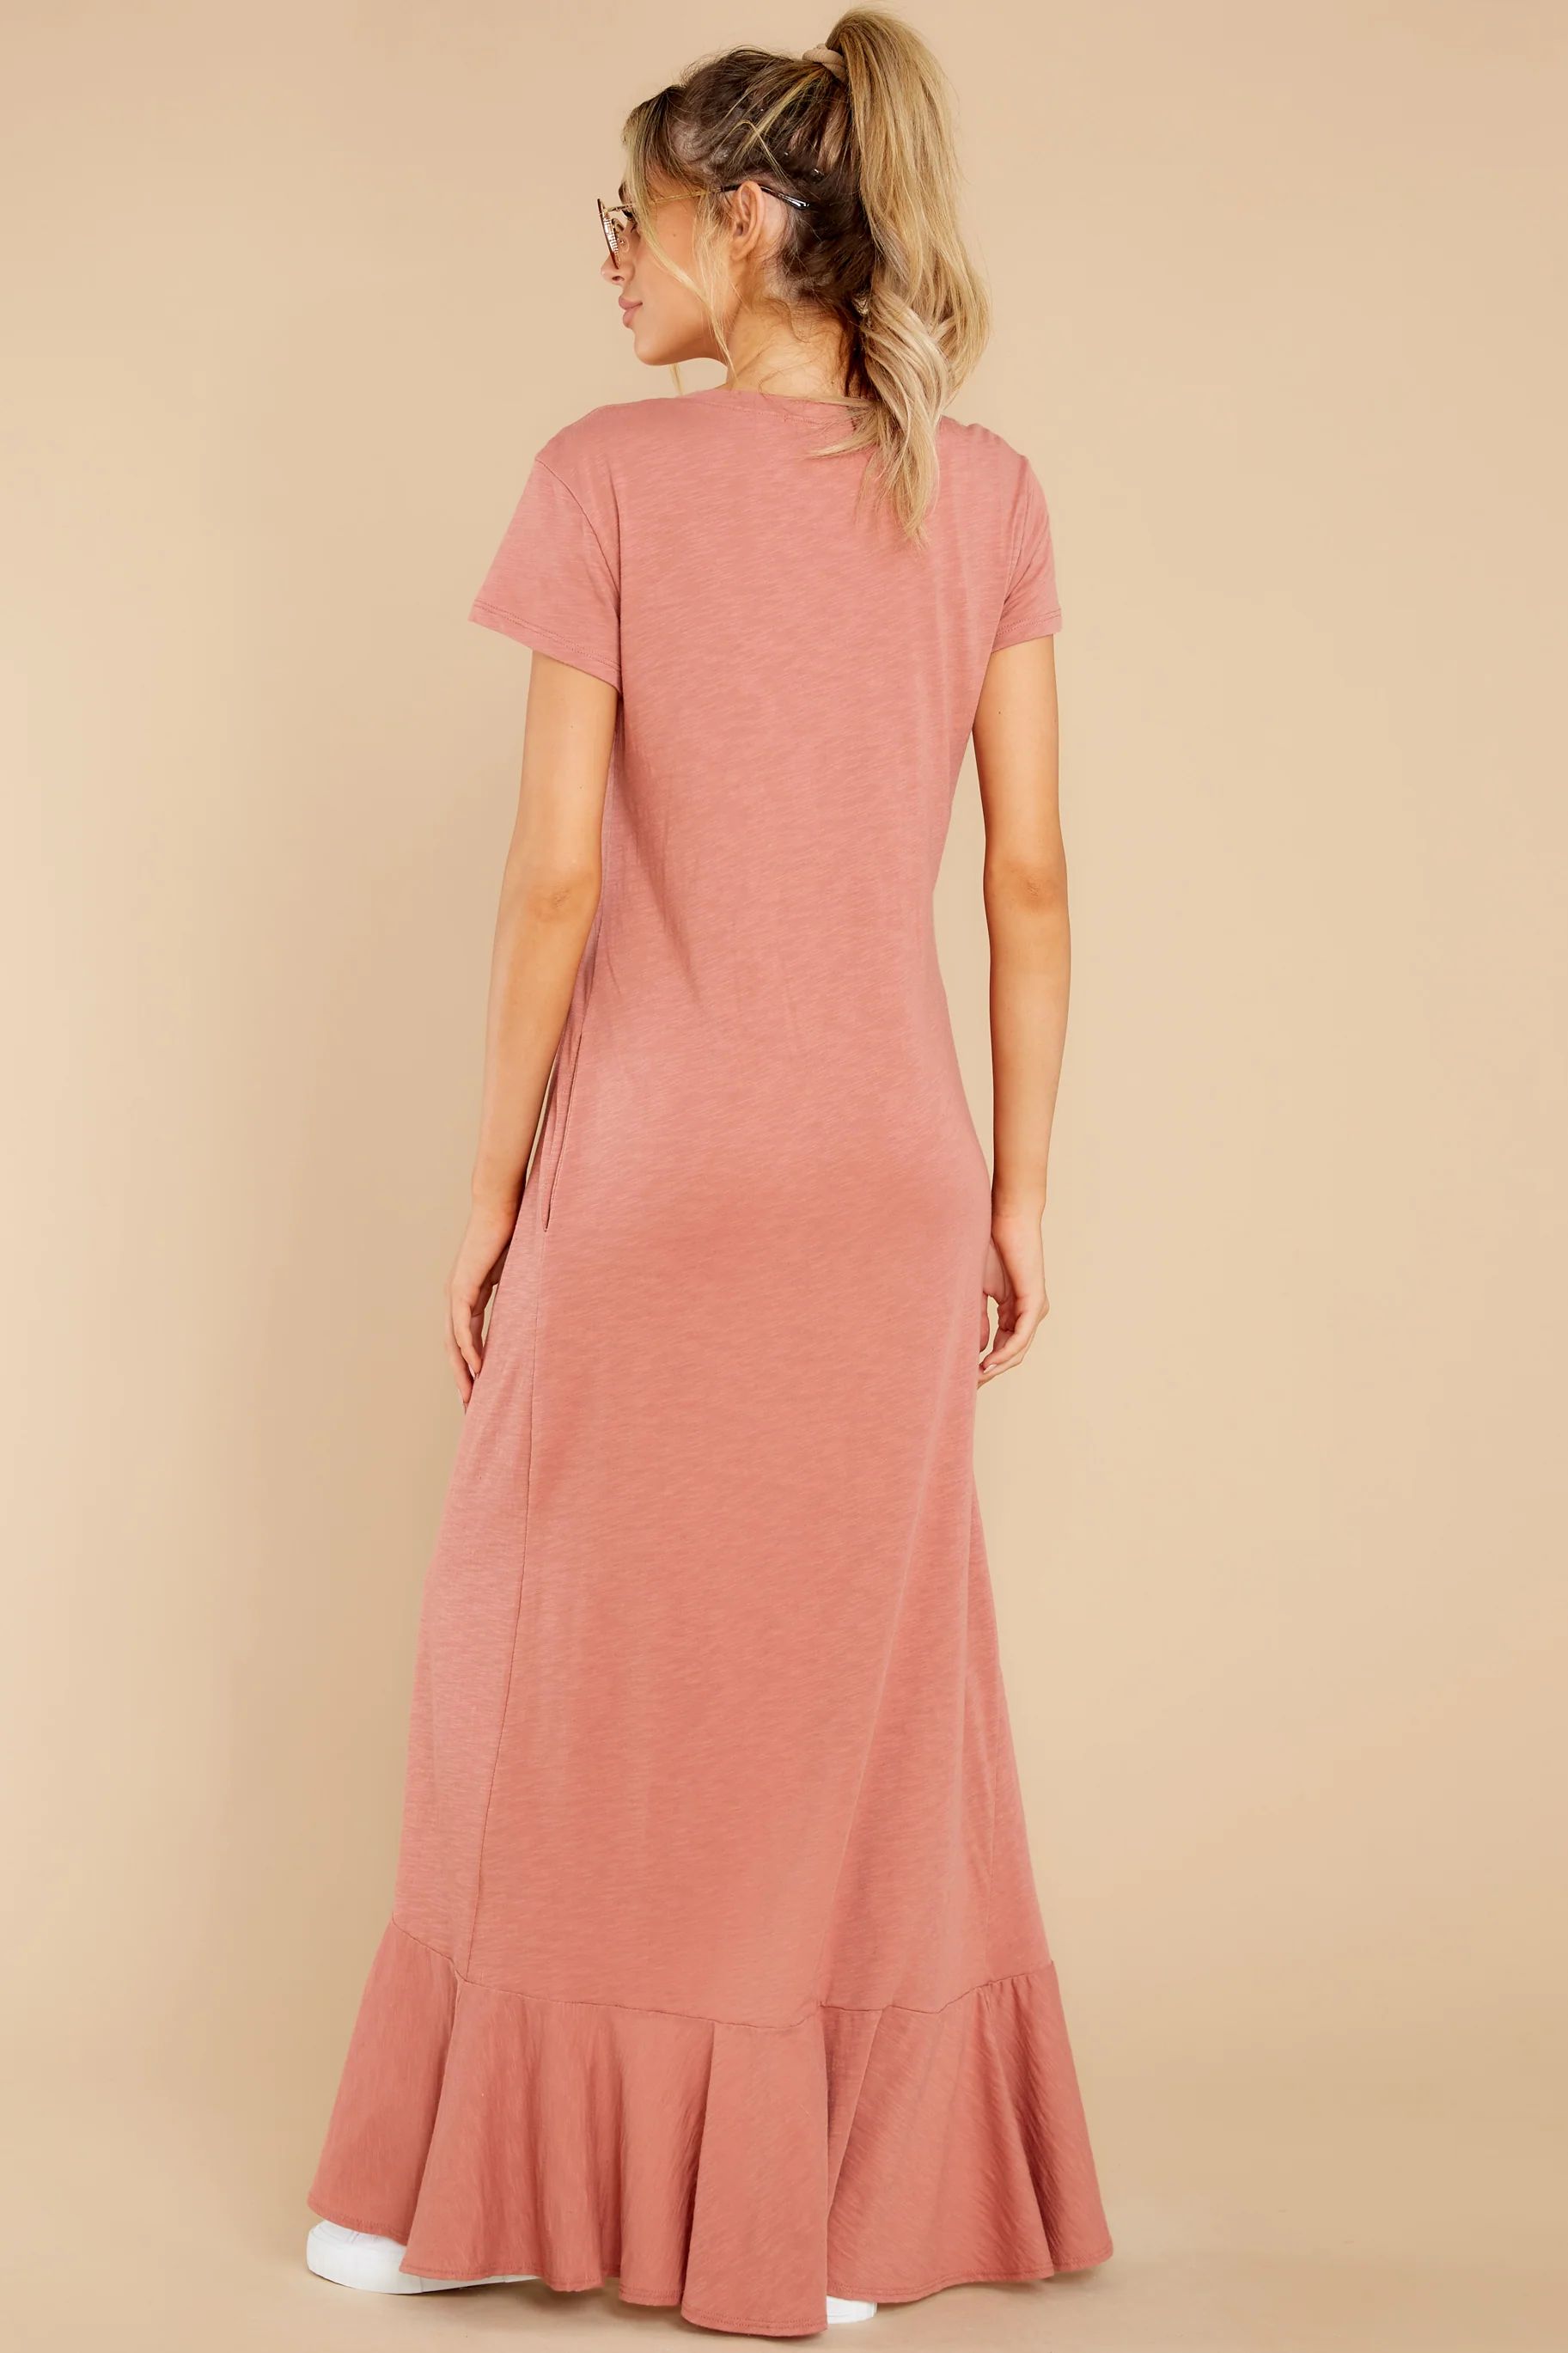 Need It All Rose Pink Maxi Dress | Red Dress 